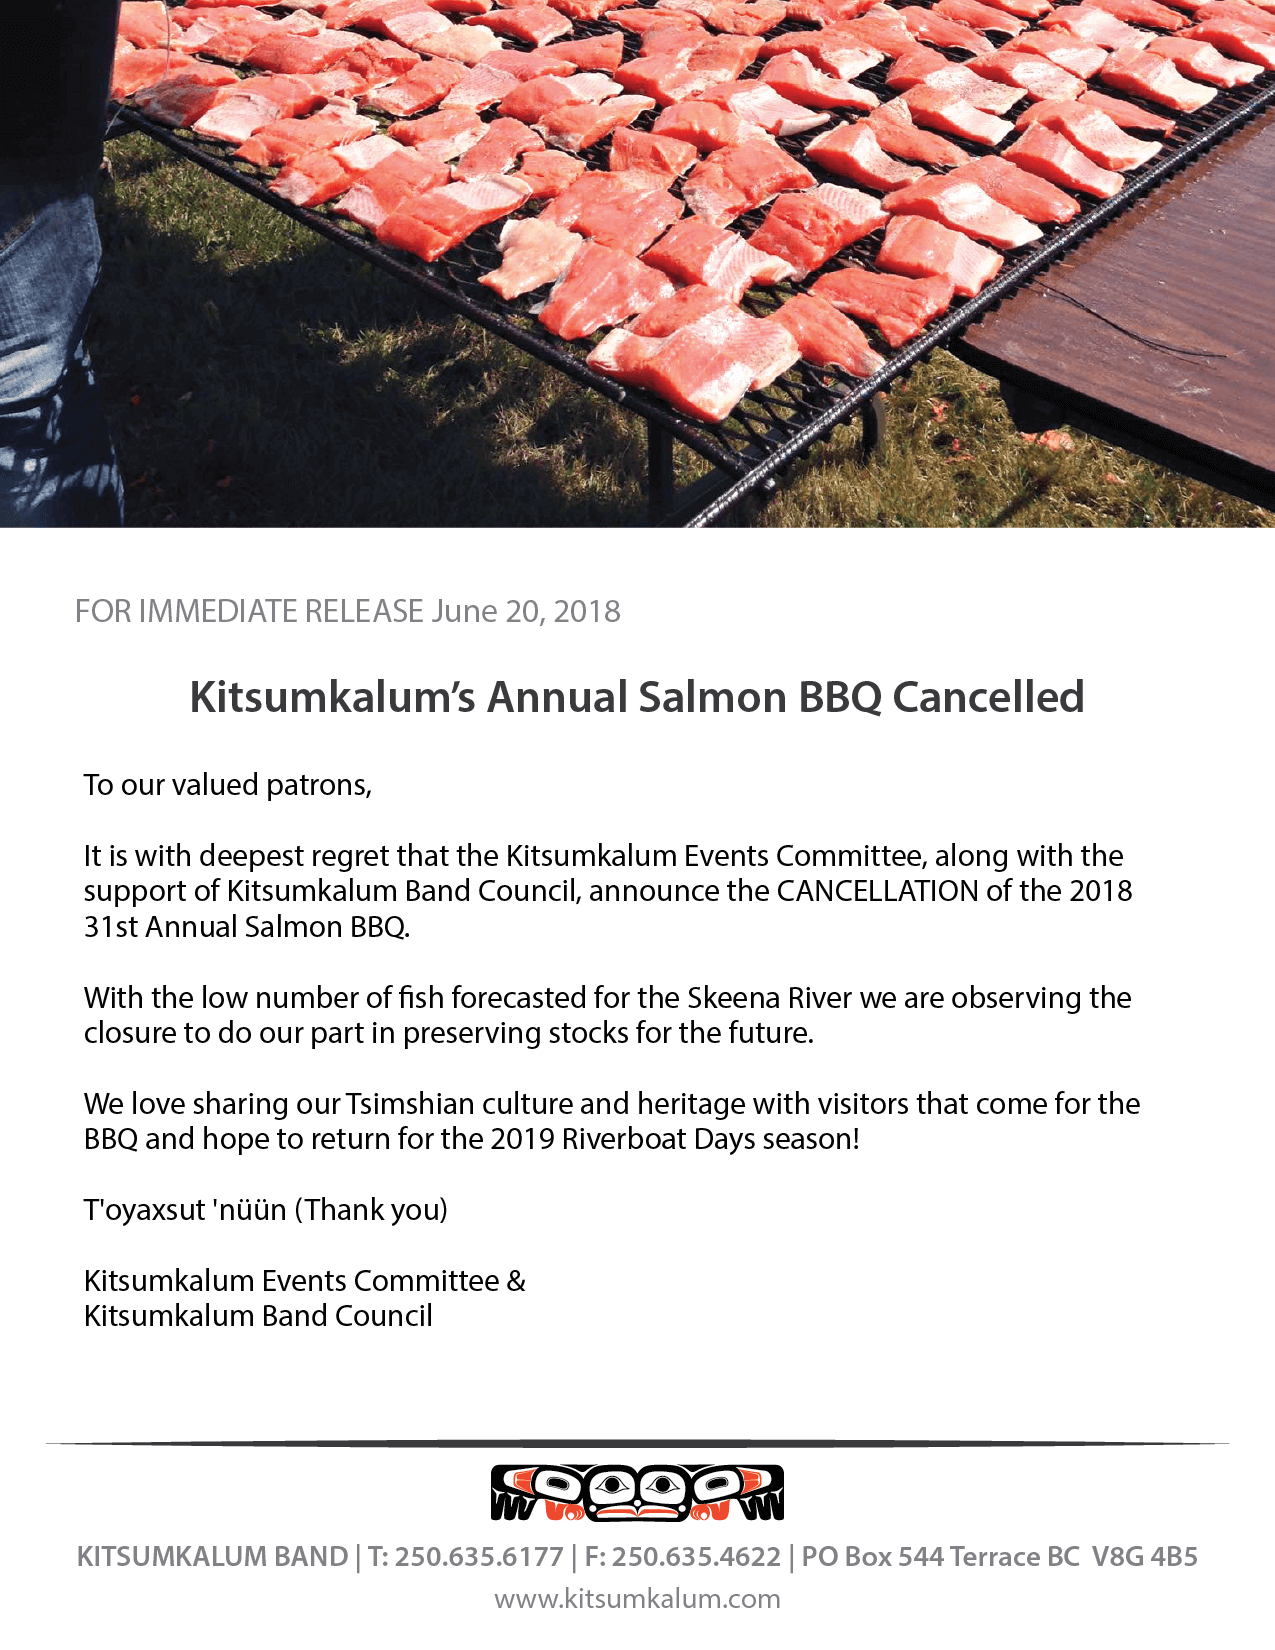 Kitsumkalum’s Annual Salmon BBQ Cancelled